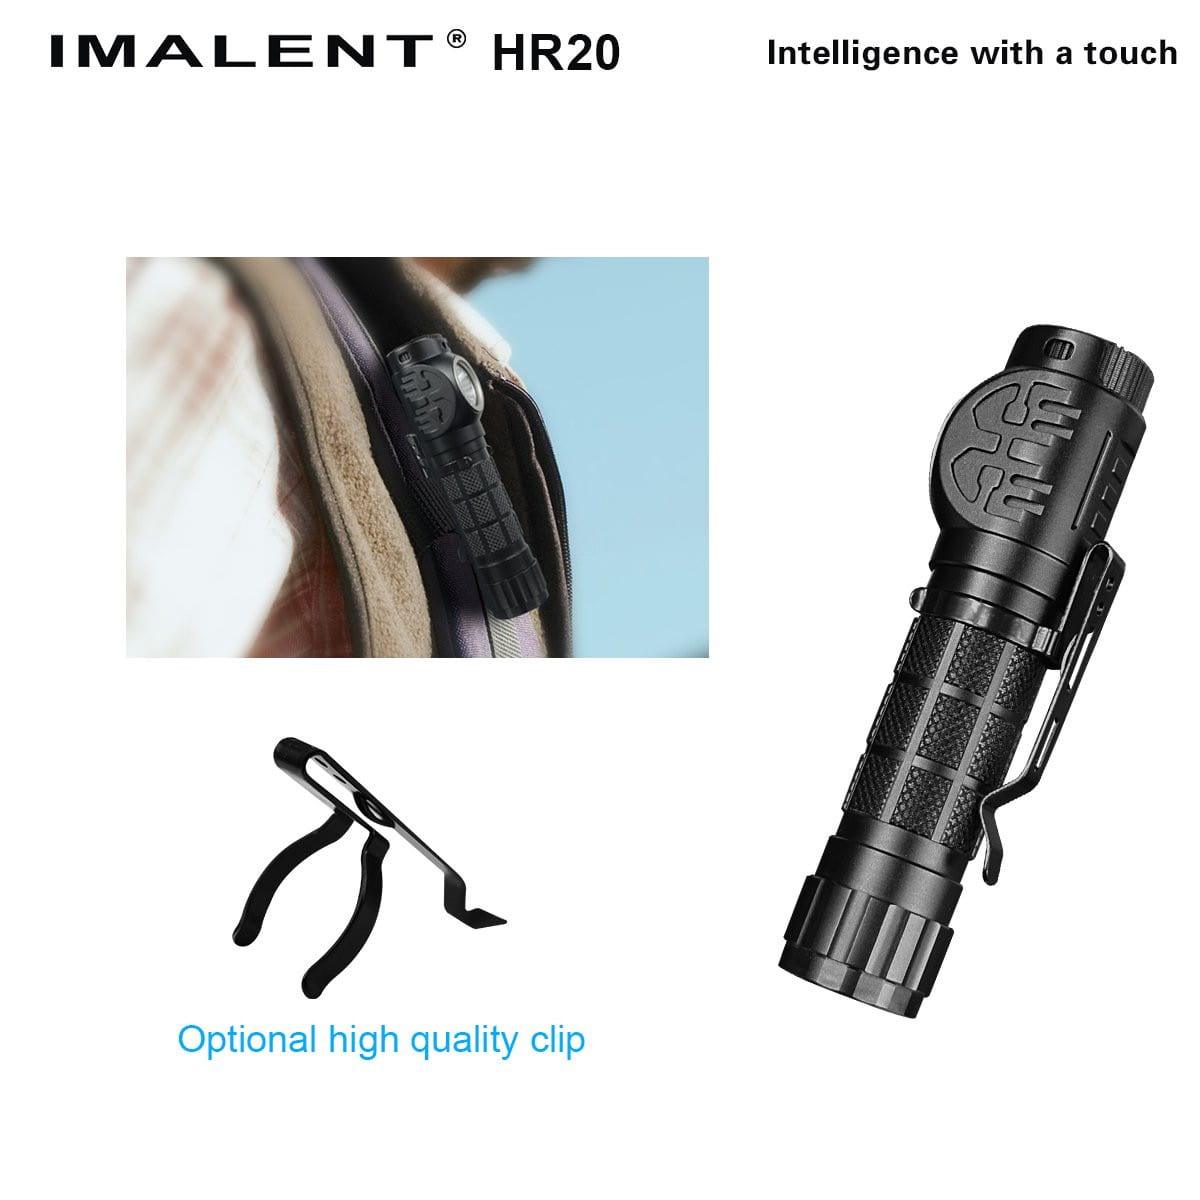 imalentstore - HR20 LED Headlamp - imalentstore - Headlamps